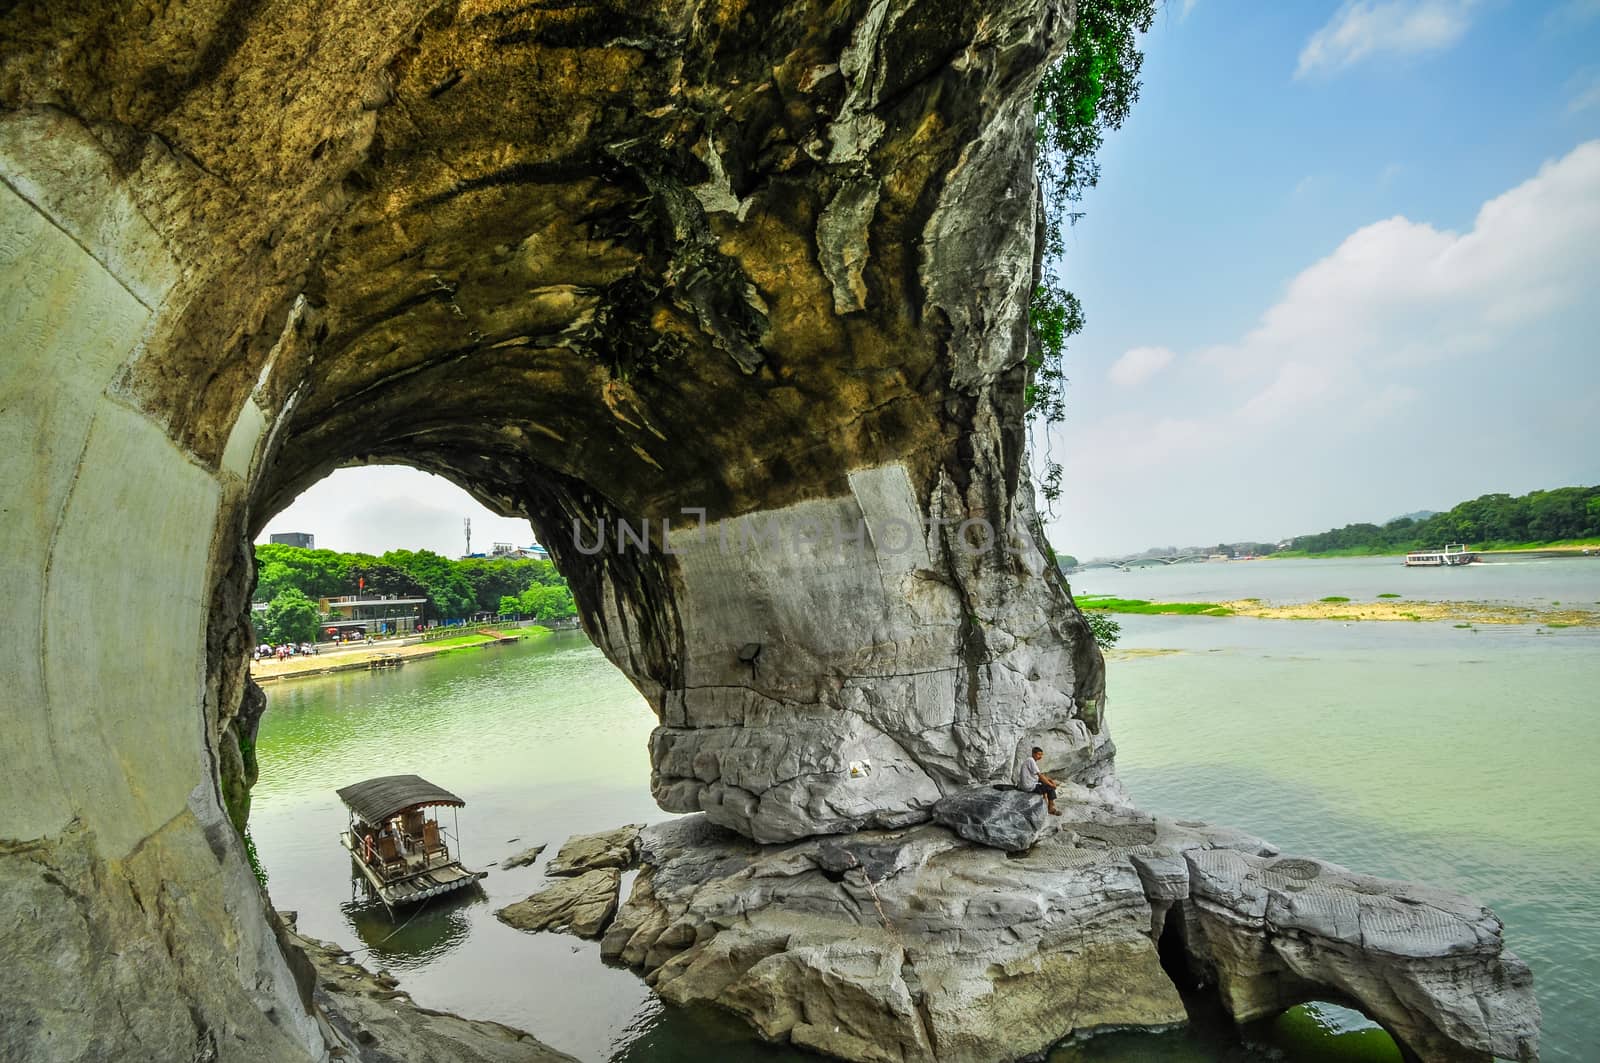 Guillin China Seven Star Park and Karst rocks Yangshuo by weltreisendertj